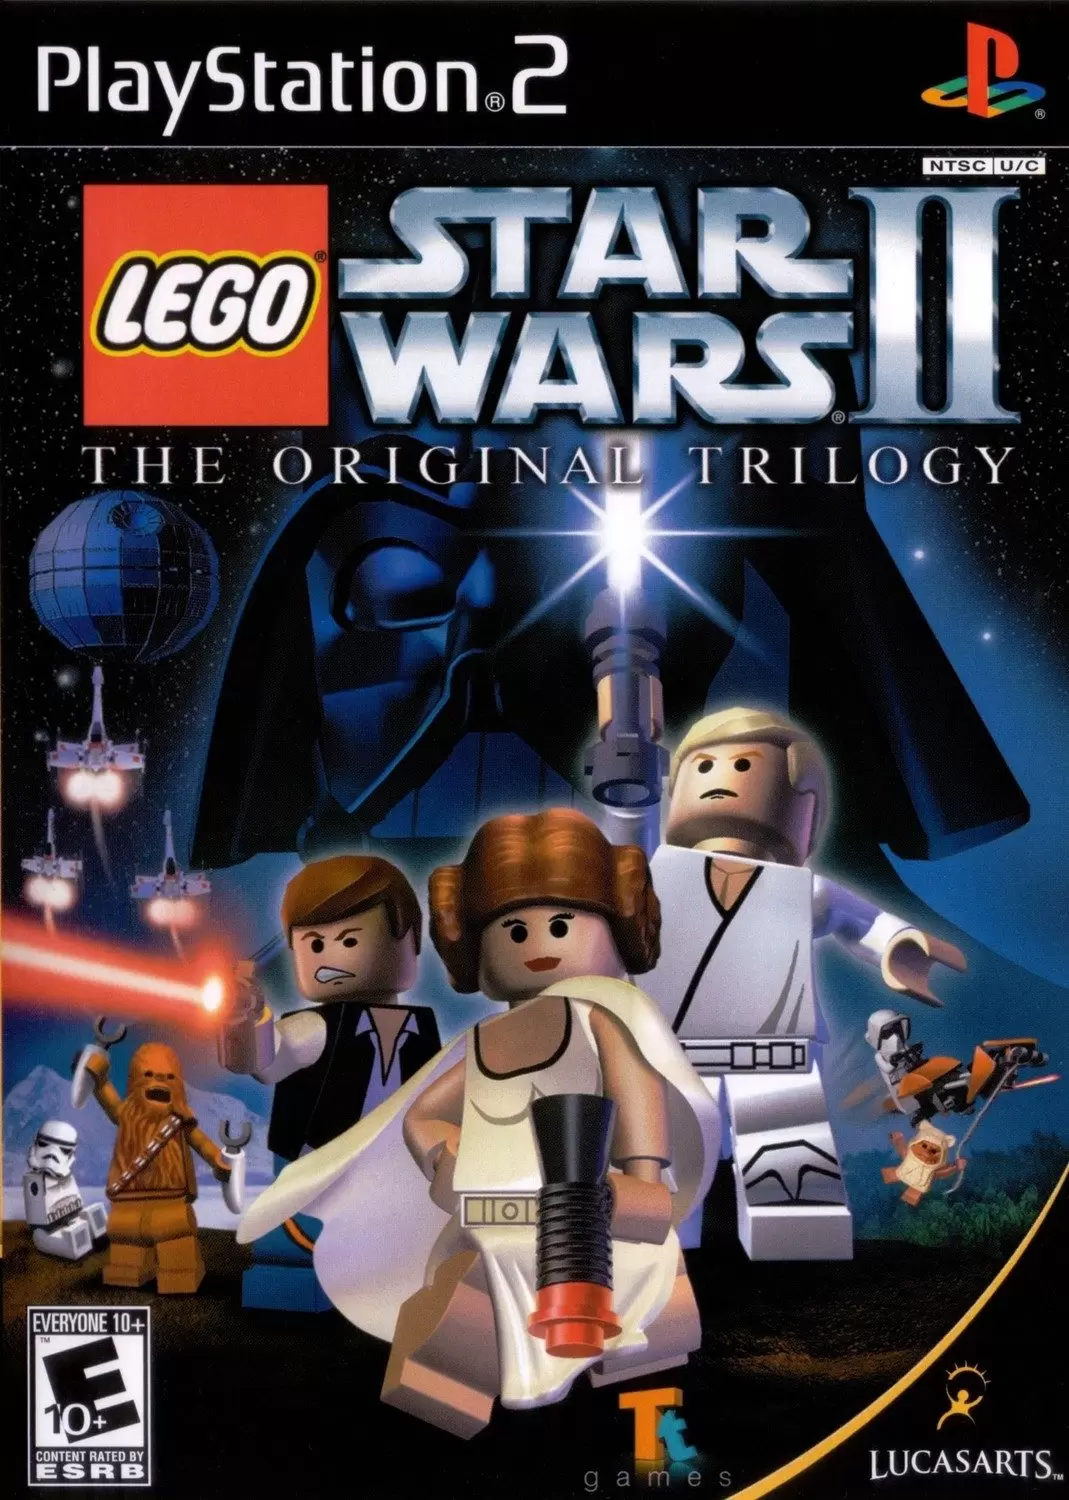 PS2 Games - Lego Star Wars II: The Original Trilogy